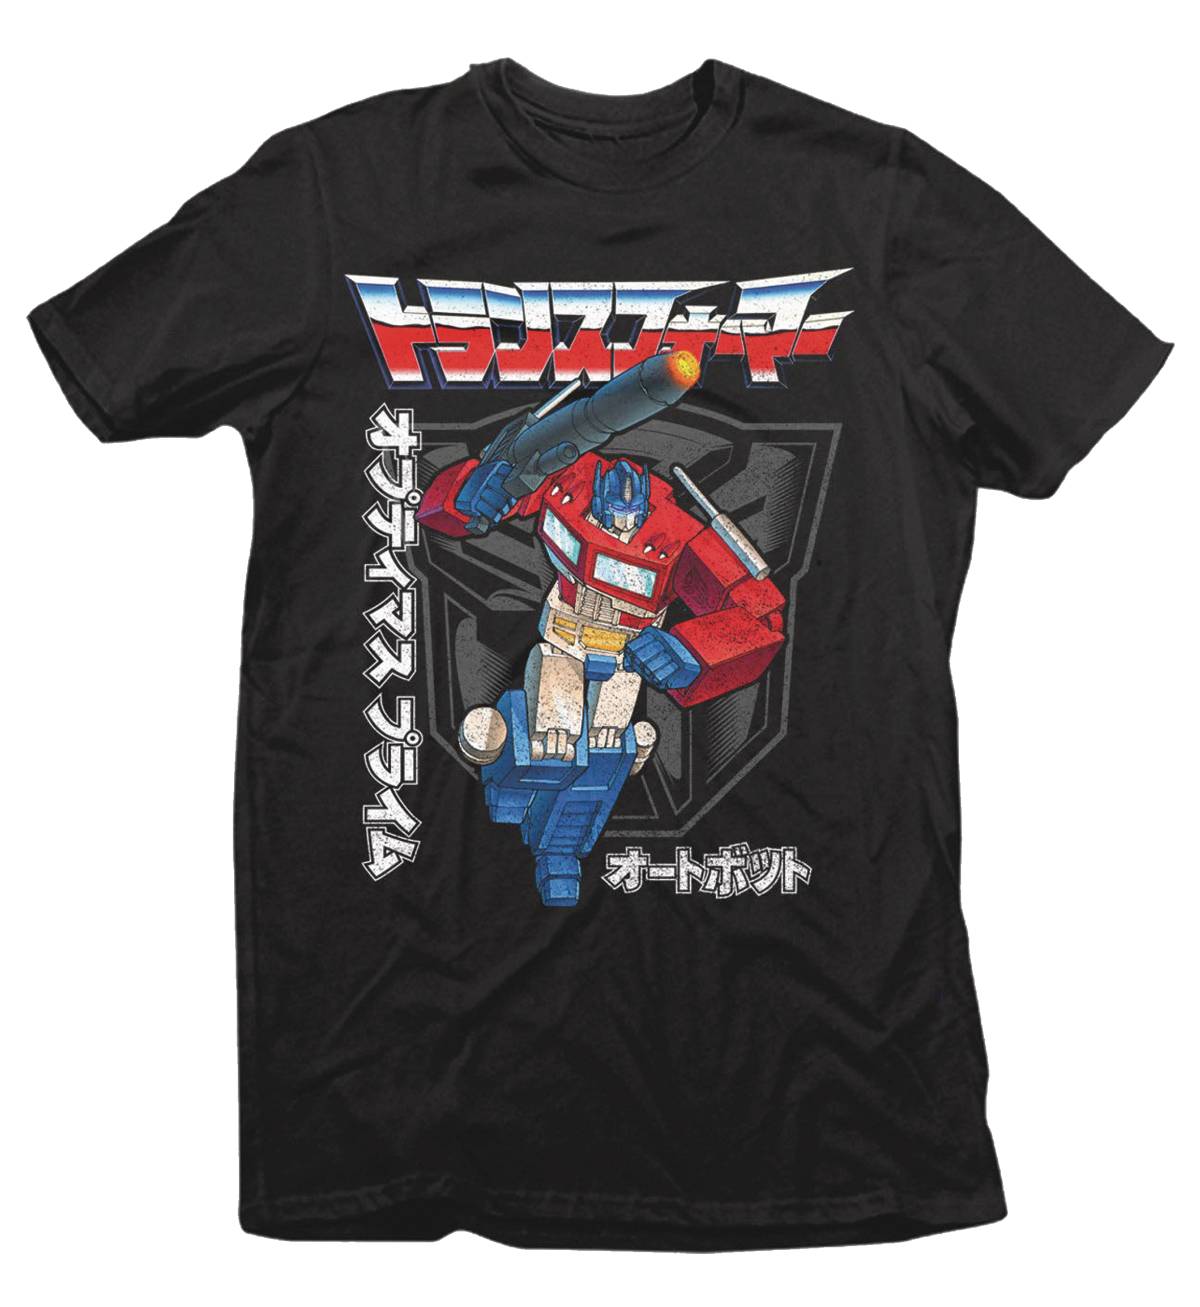 Transformers Japanese Text Black T-Shirt XL